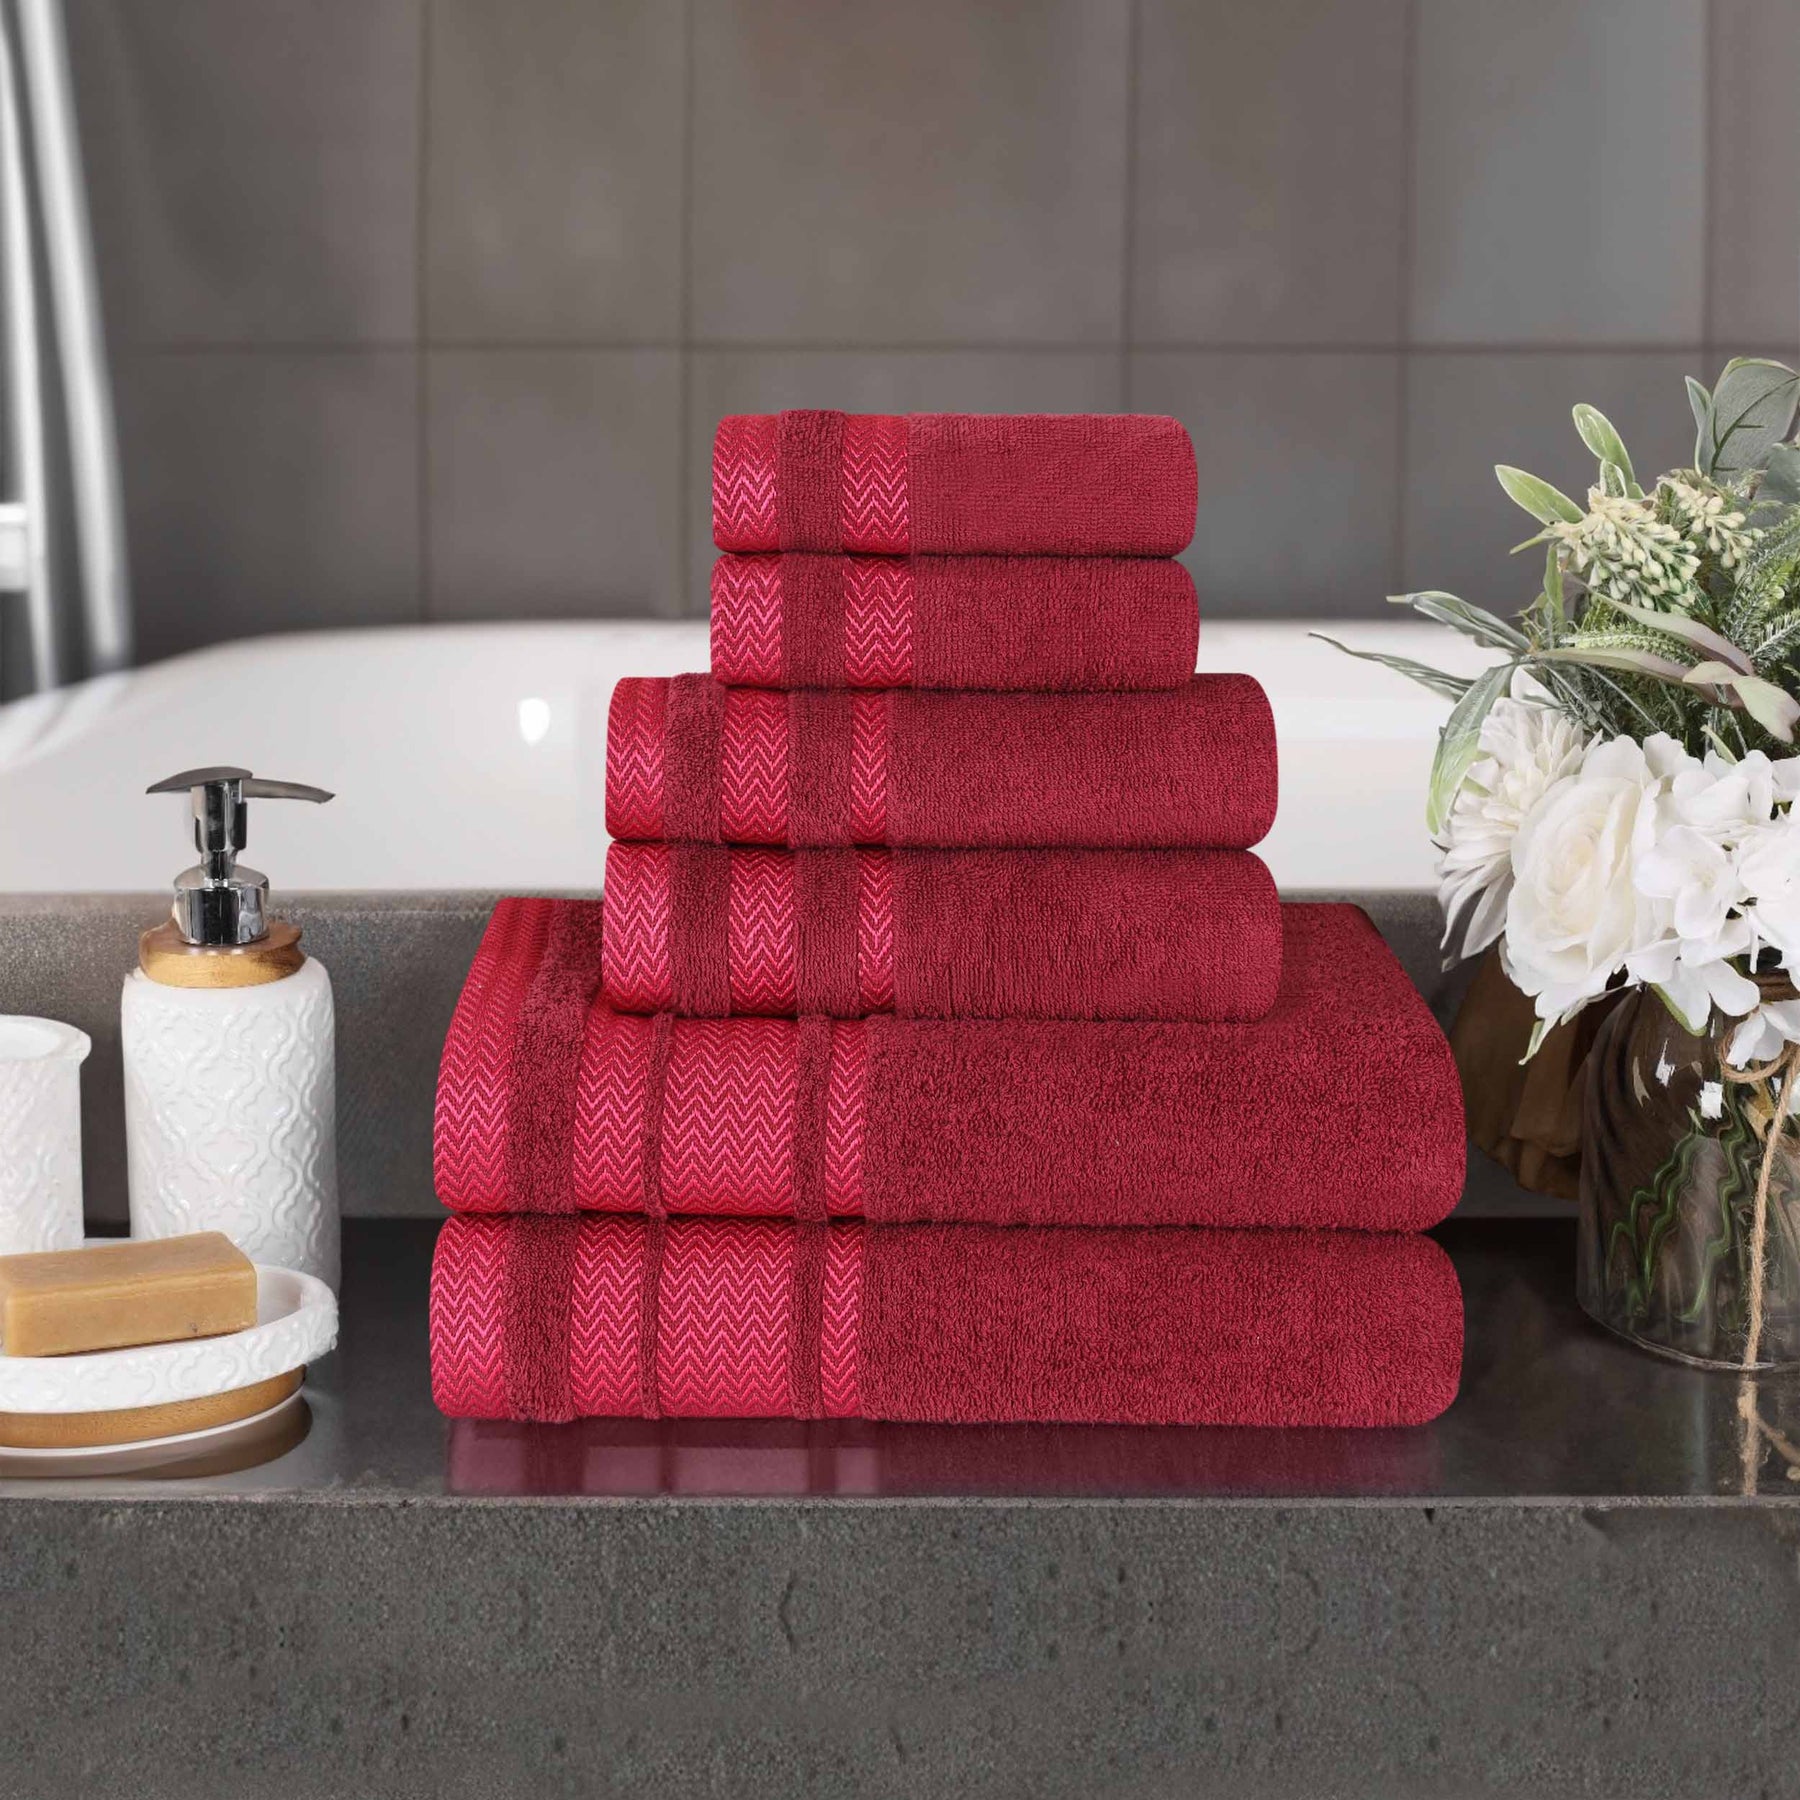  LANE LINEN Large Bath Towels - 100% Cotton Bath Sheets, Extra  Large Bath Towels, Zero Twist, 4 Piece Bath Sheet Set, Quick Dry, Super  Soft Shower Towels, Highly Absorbent Bathroom Towels 